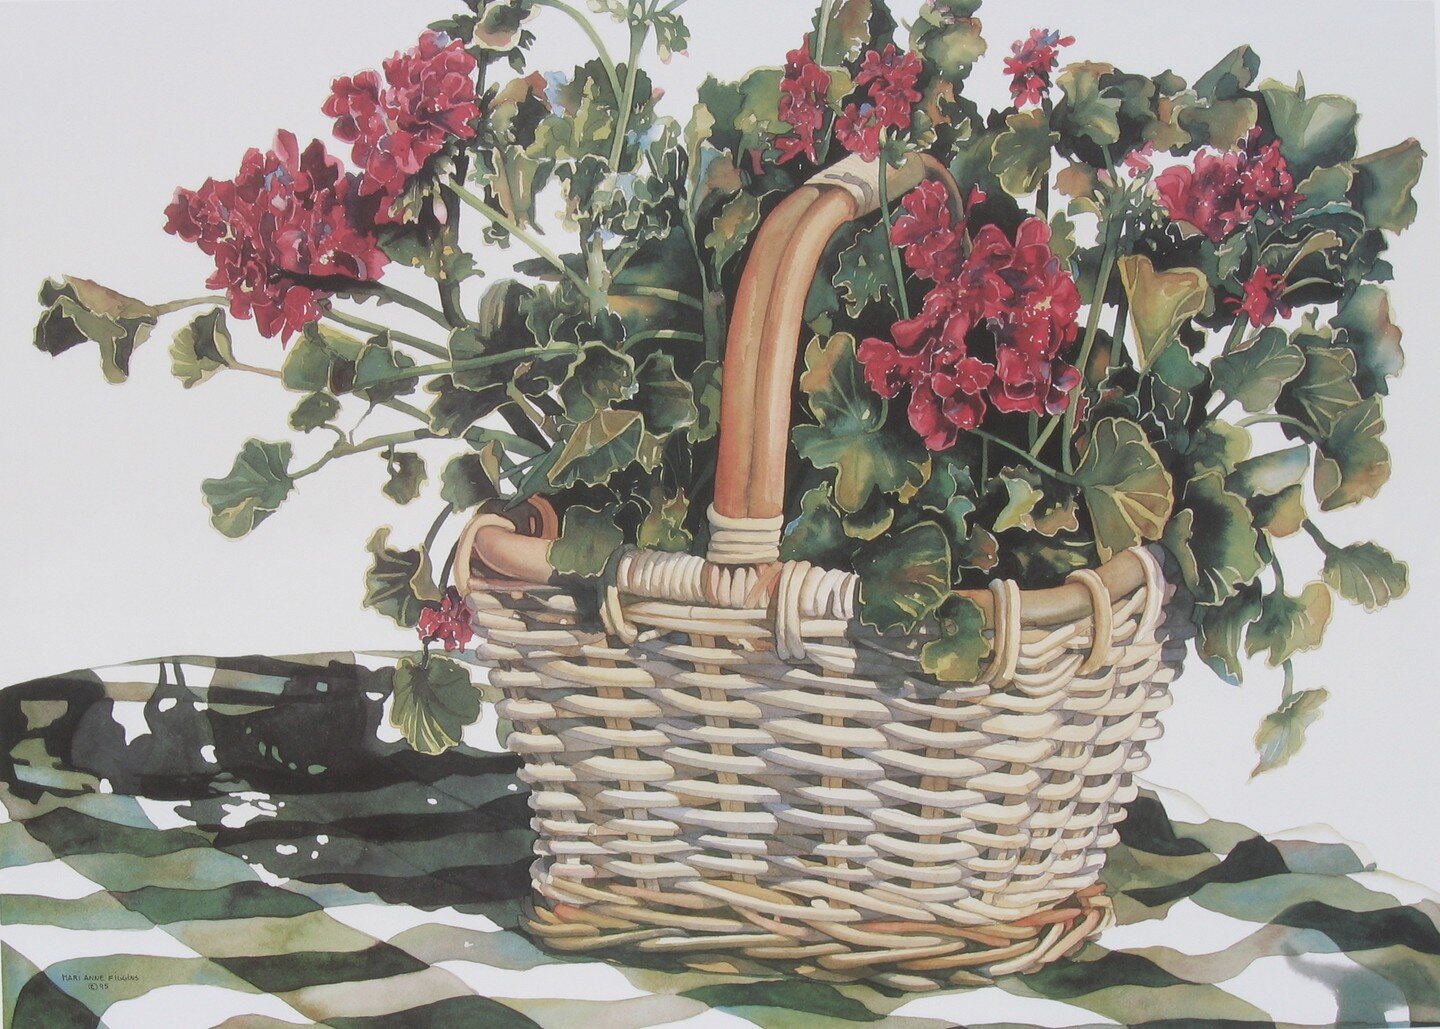 A basket of #geraniums 🌻
Watercolor print called &quot;Basket&quot;
18 x 1/2&quot; X 25 1/2&quot; 
.
.
.
.
.
.
.
#geranium #watercolor #watercolorpainting #watercolorpaintings #watercolorpaper #watercolorartist #floralpainting #flowerpainting #flowe